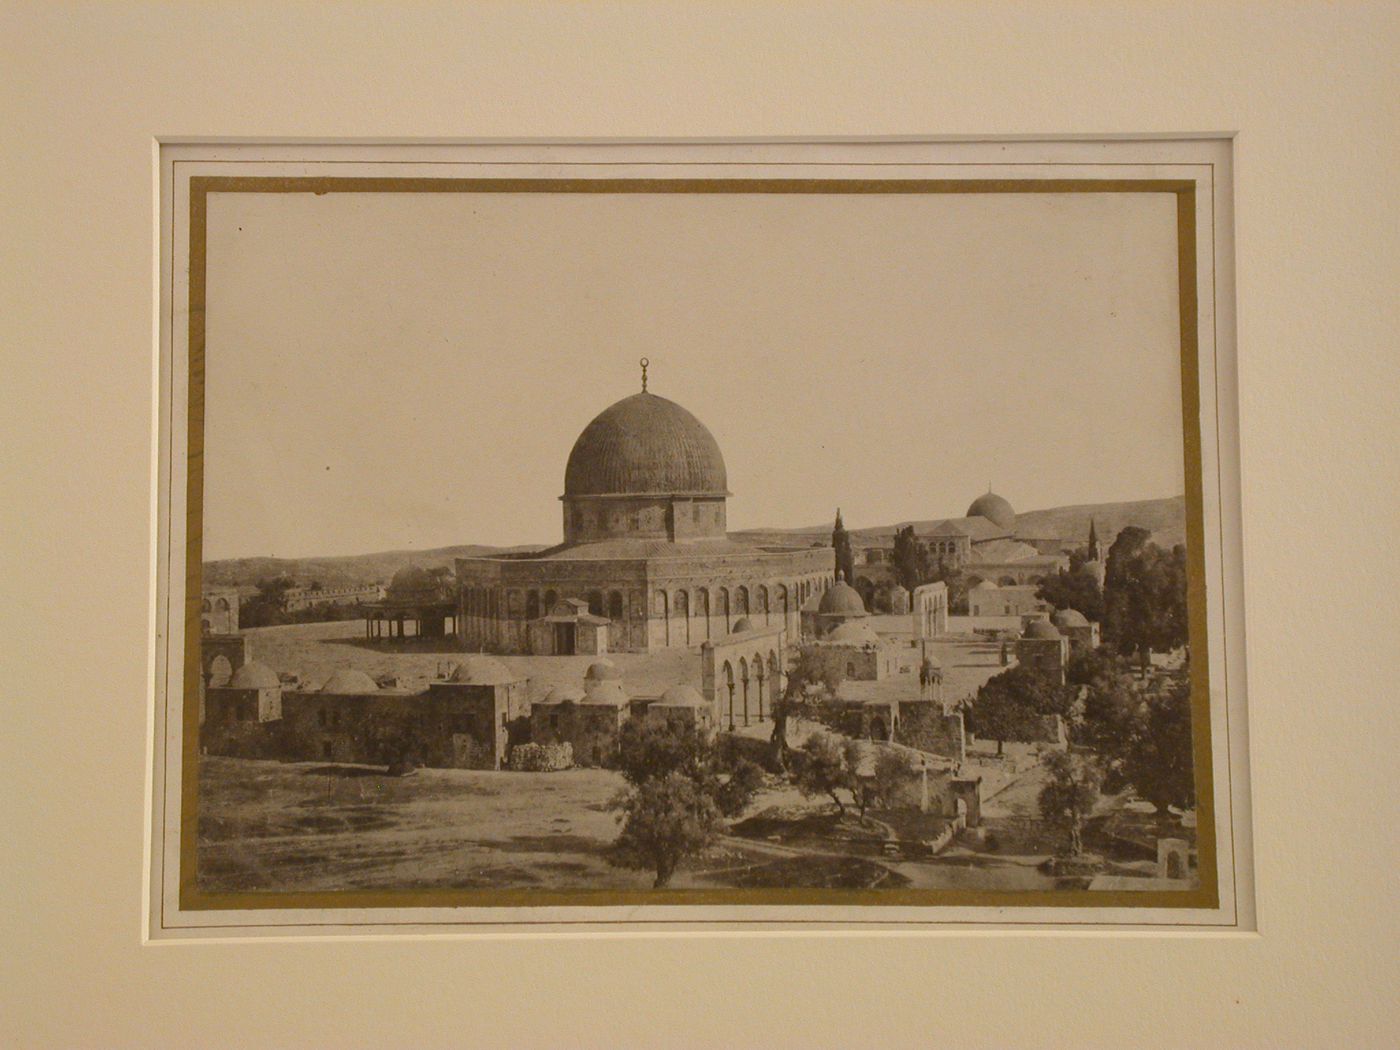 Haram al-Shashrif (Temple mount), with dome of the Rock, Jerusalem, Palestine